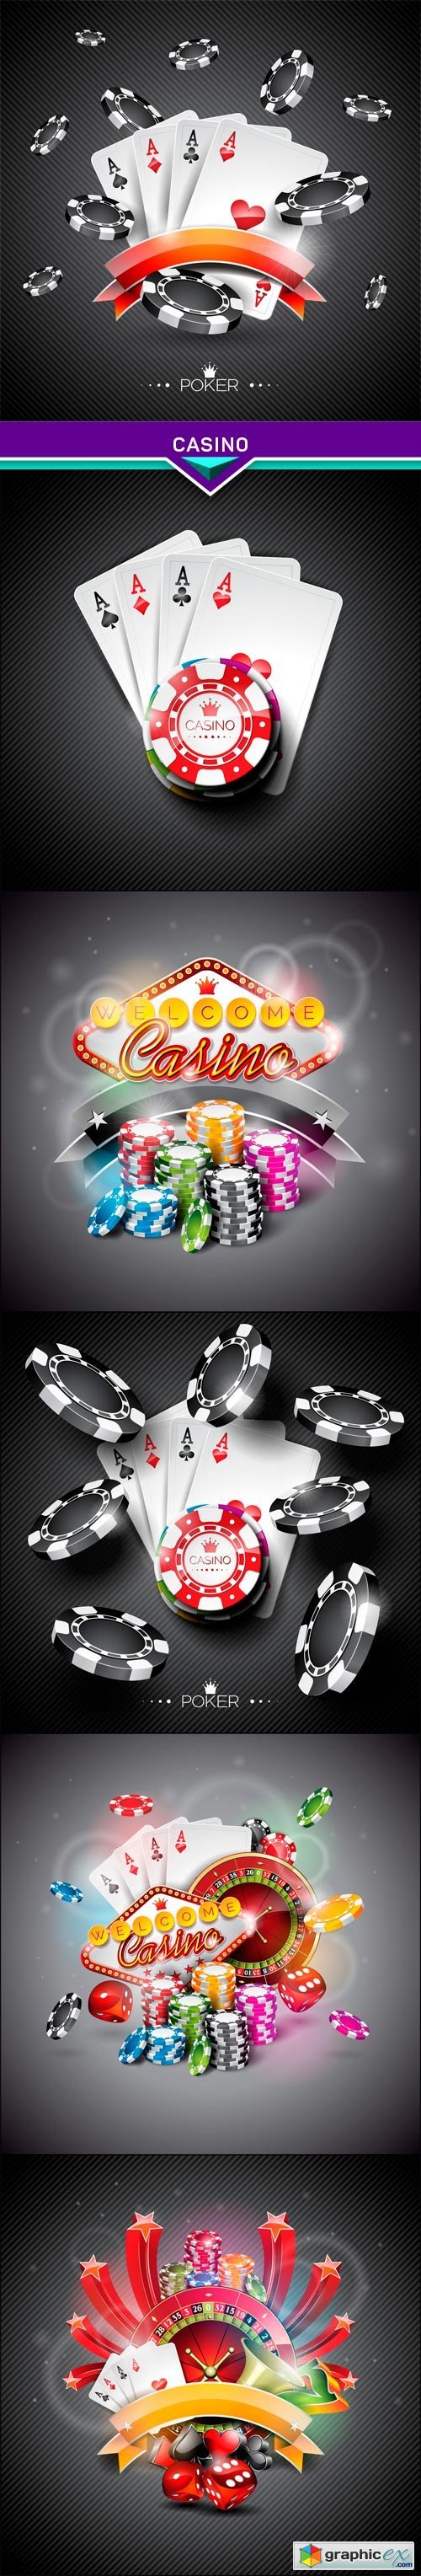 Seamless casino pattern illustration #1 6x EPS